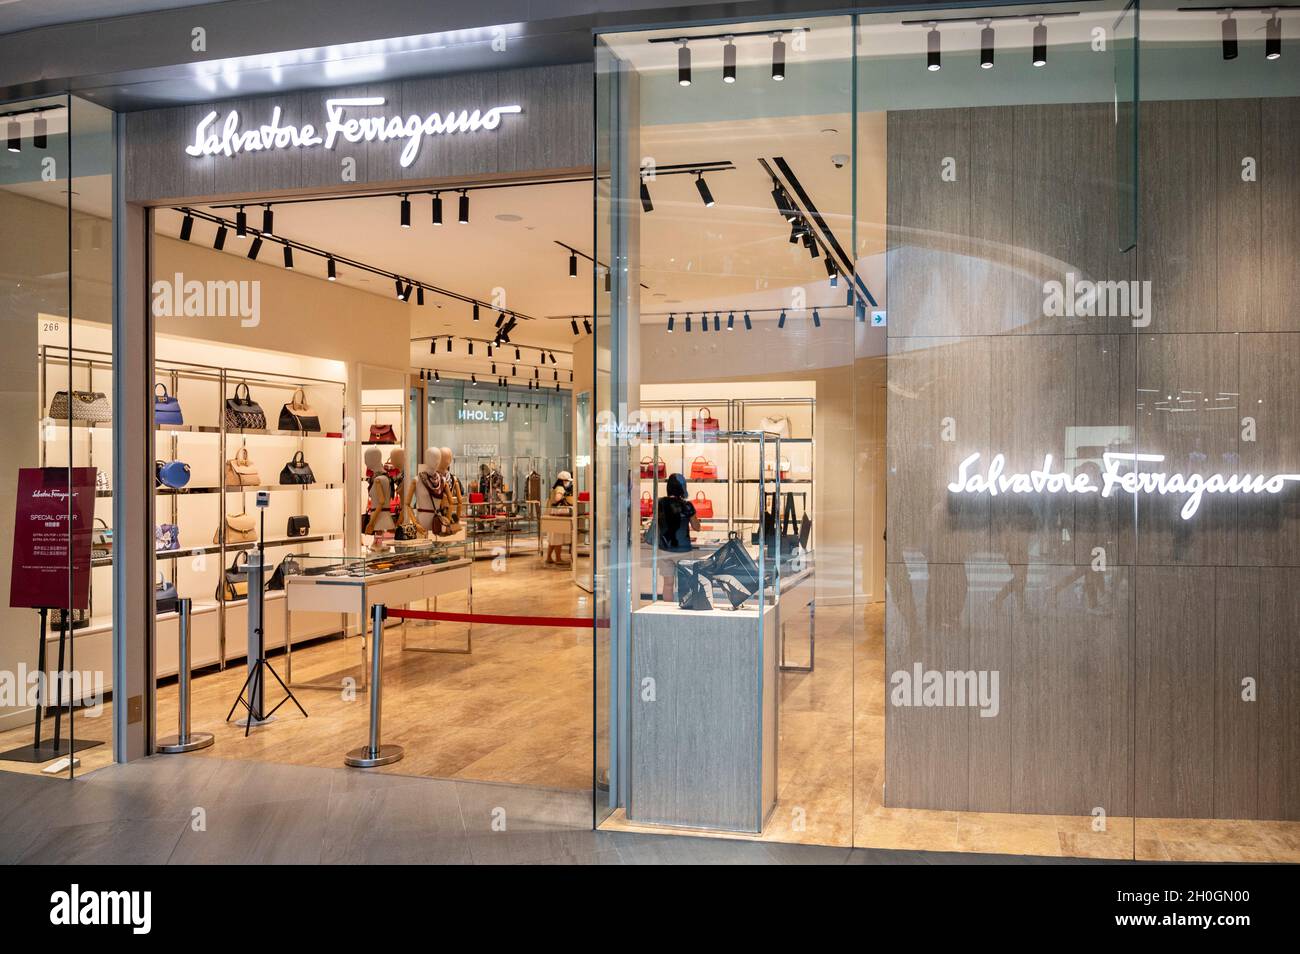 Italian luxury shoe brand Salvatore Ferragamo store and logo seen in Hong  Kong Stock Photo - Alamy